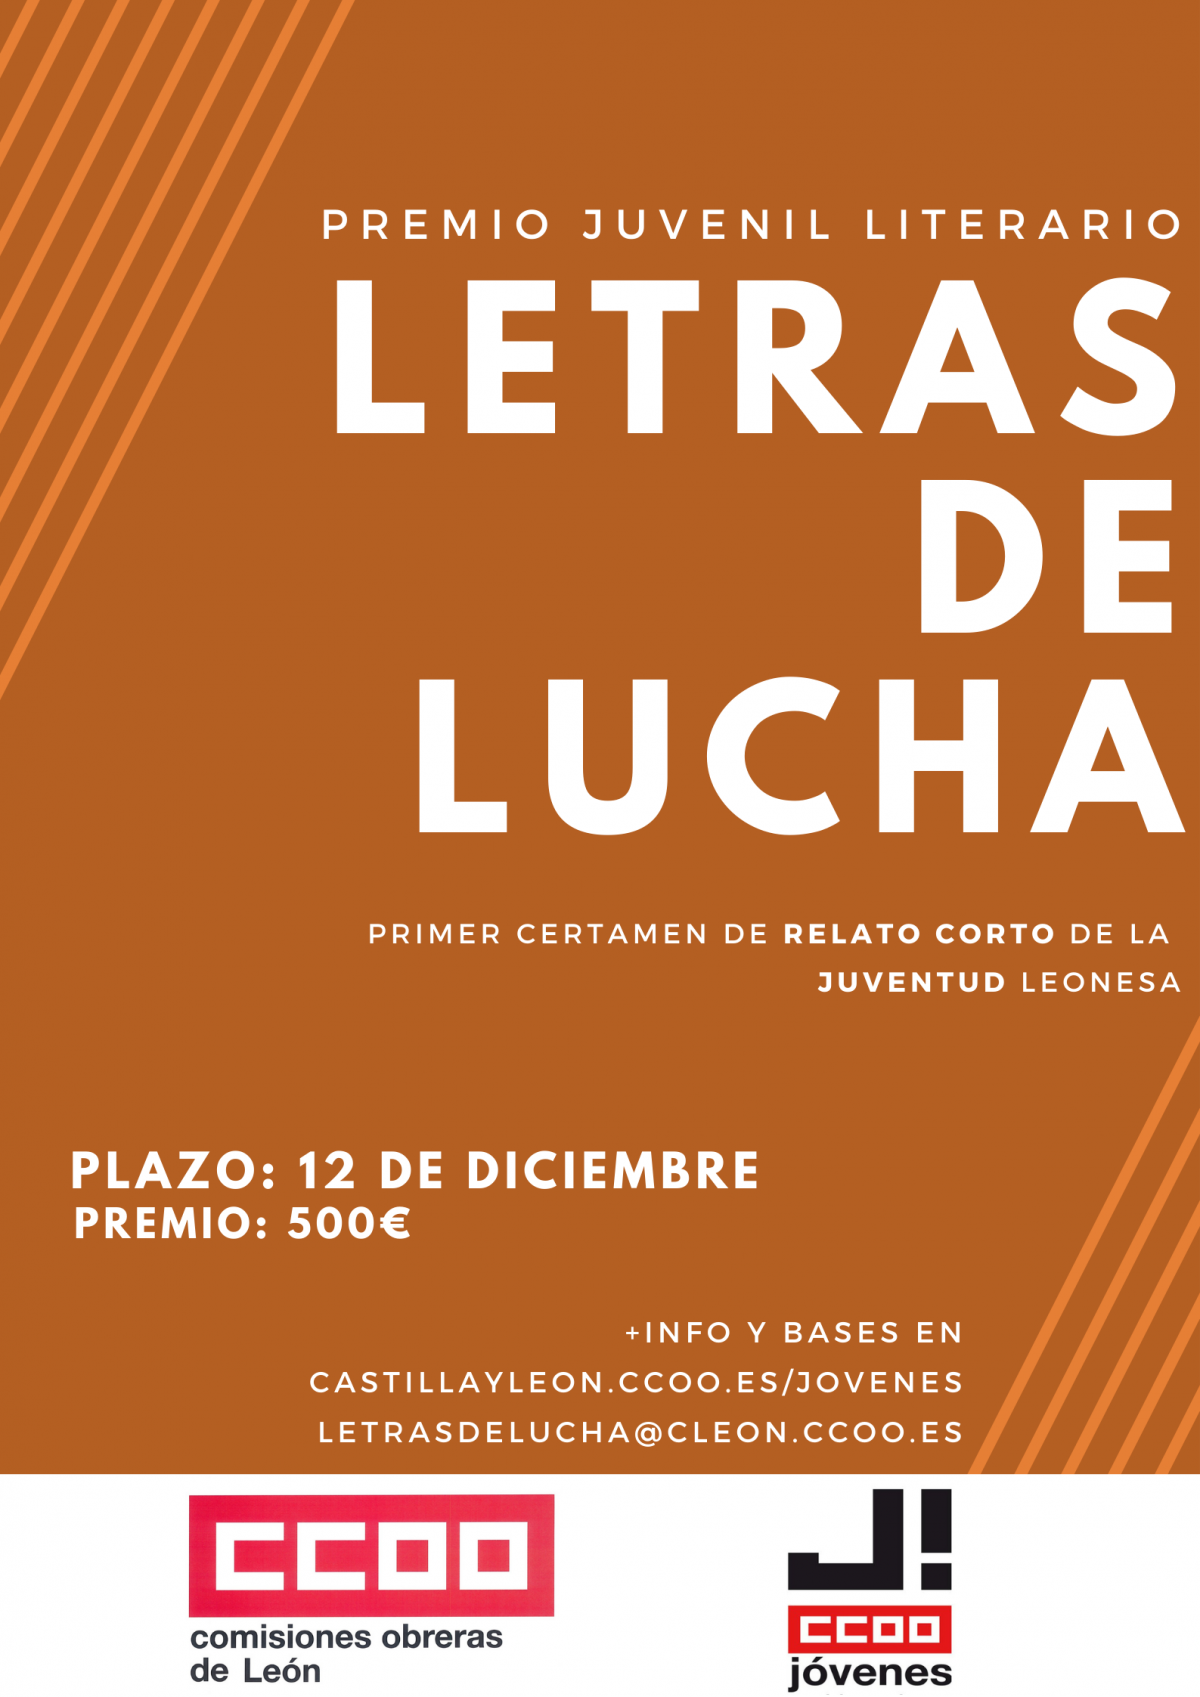 Premio Juvenil Literario "Letras de Lucha".